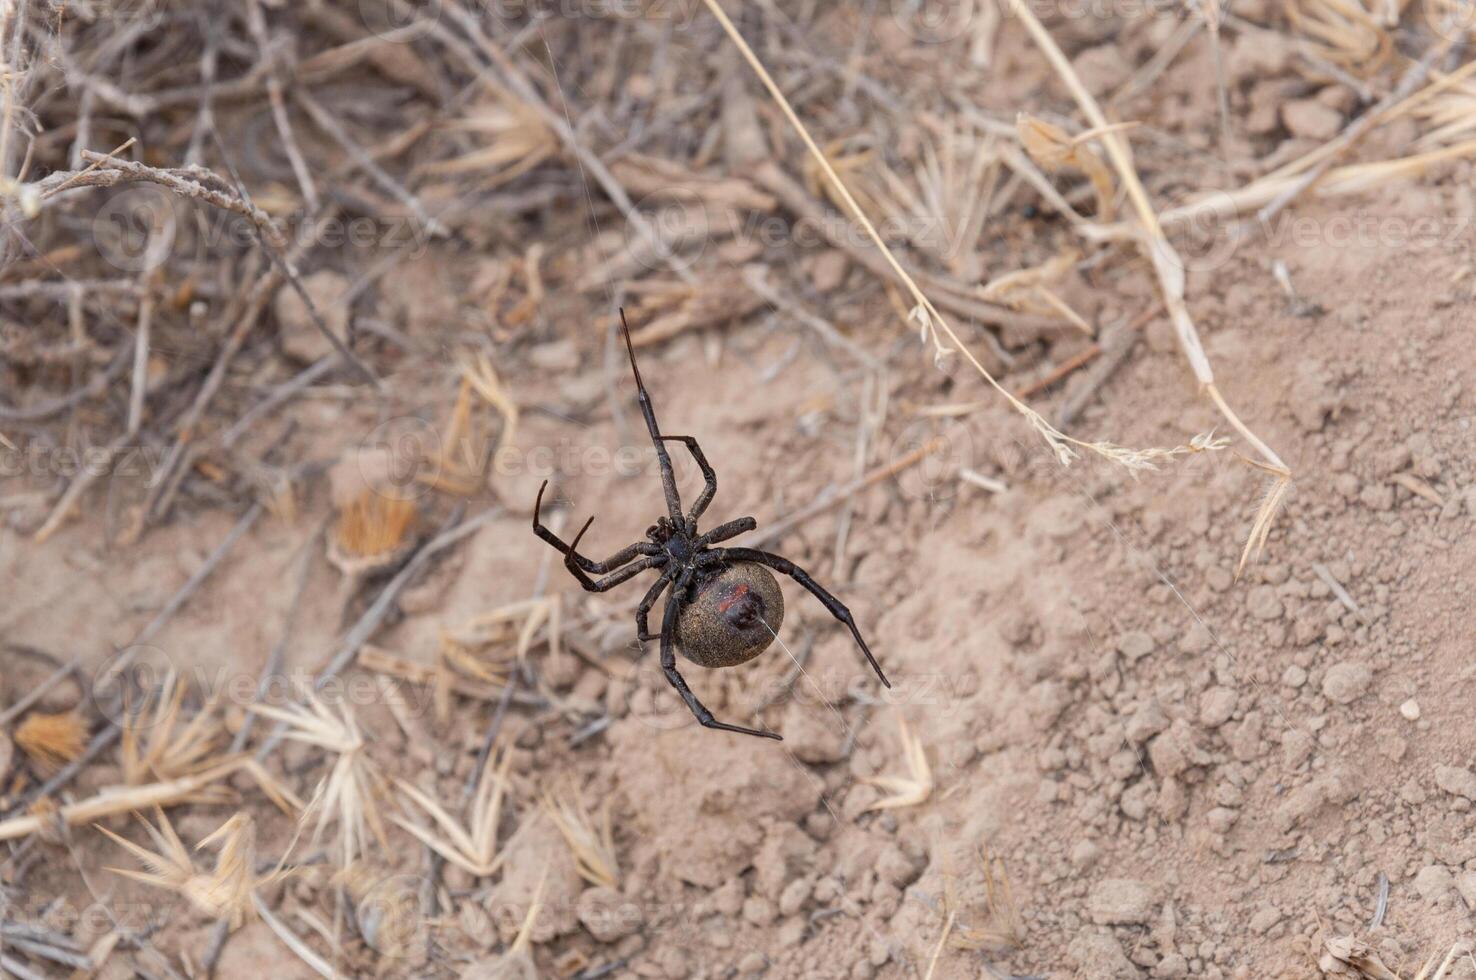 In the stark desert, a Black Widow spider, Latrodectus tredecimguttatus, known locally as Karakurt, presents stark red markings on its black body, signaling danger to passersby. photo